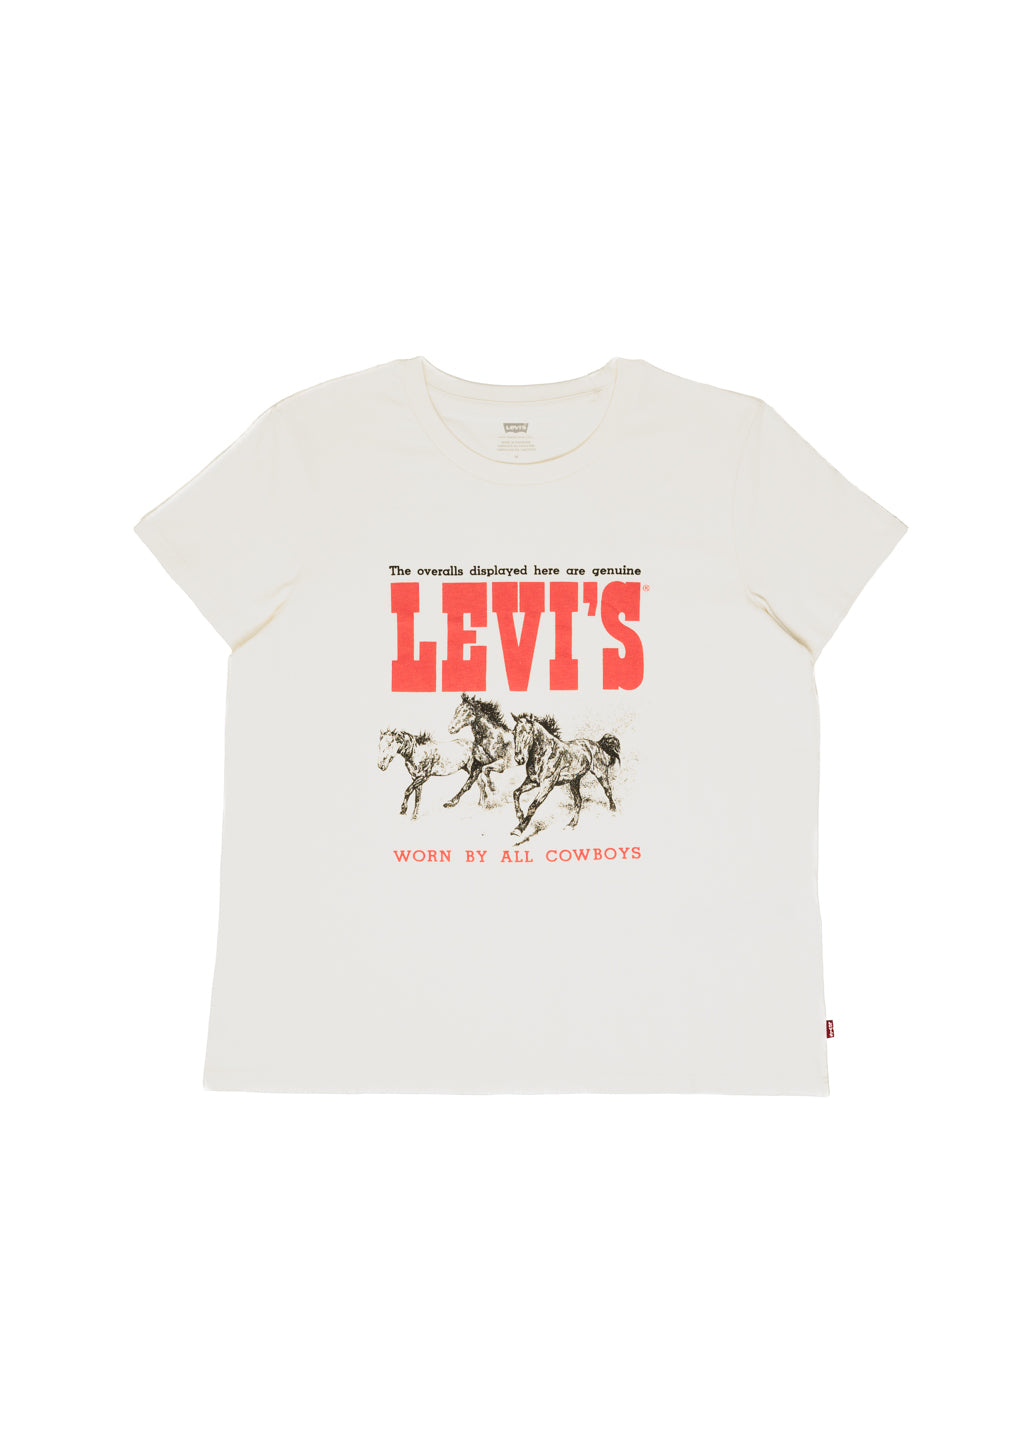 Levi's - The Perfect Tee - Horse Trio Egret - Hardpressed Print Studio Inc.